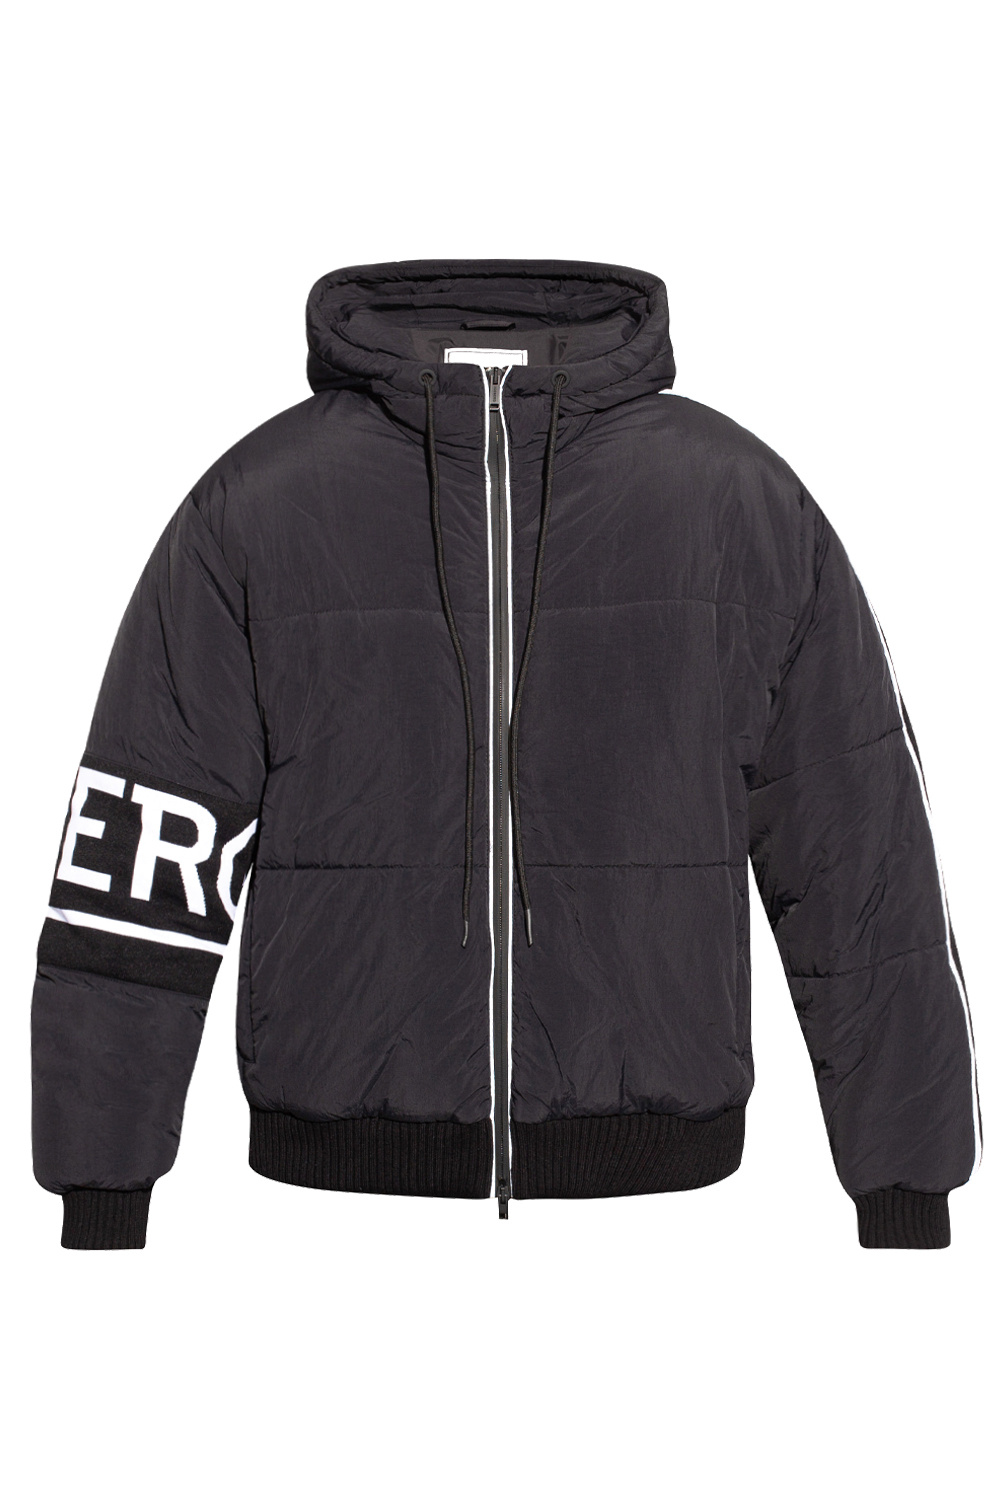 Black Hooded jacket Tory Burch - Vitkac Canada